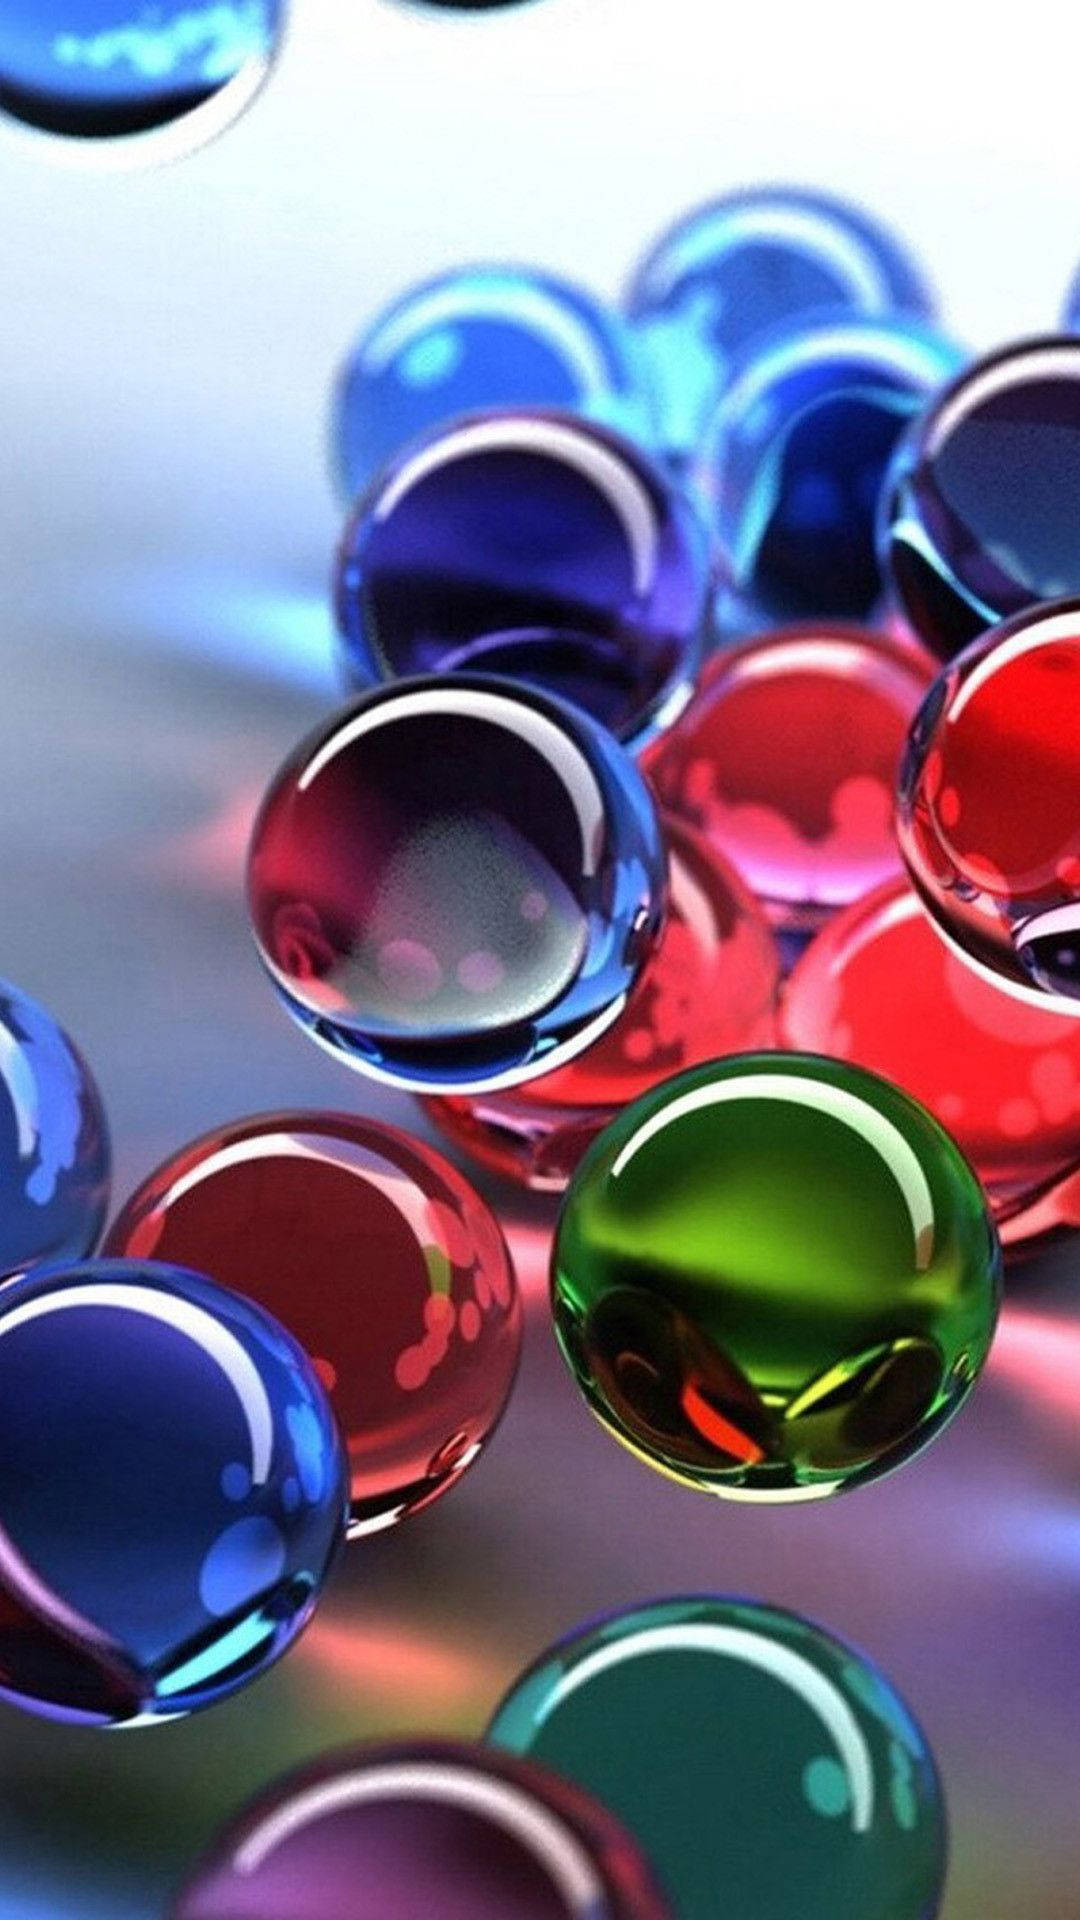 A Captivating View Of Colorful 3d Transparent Balls